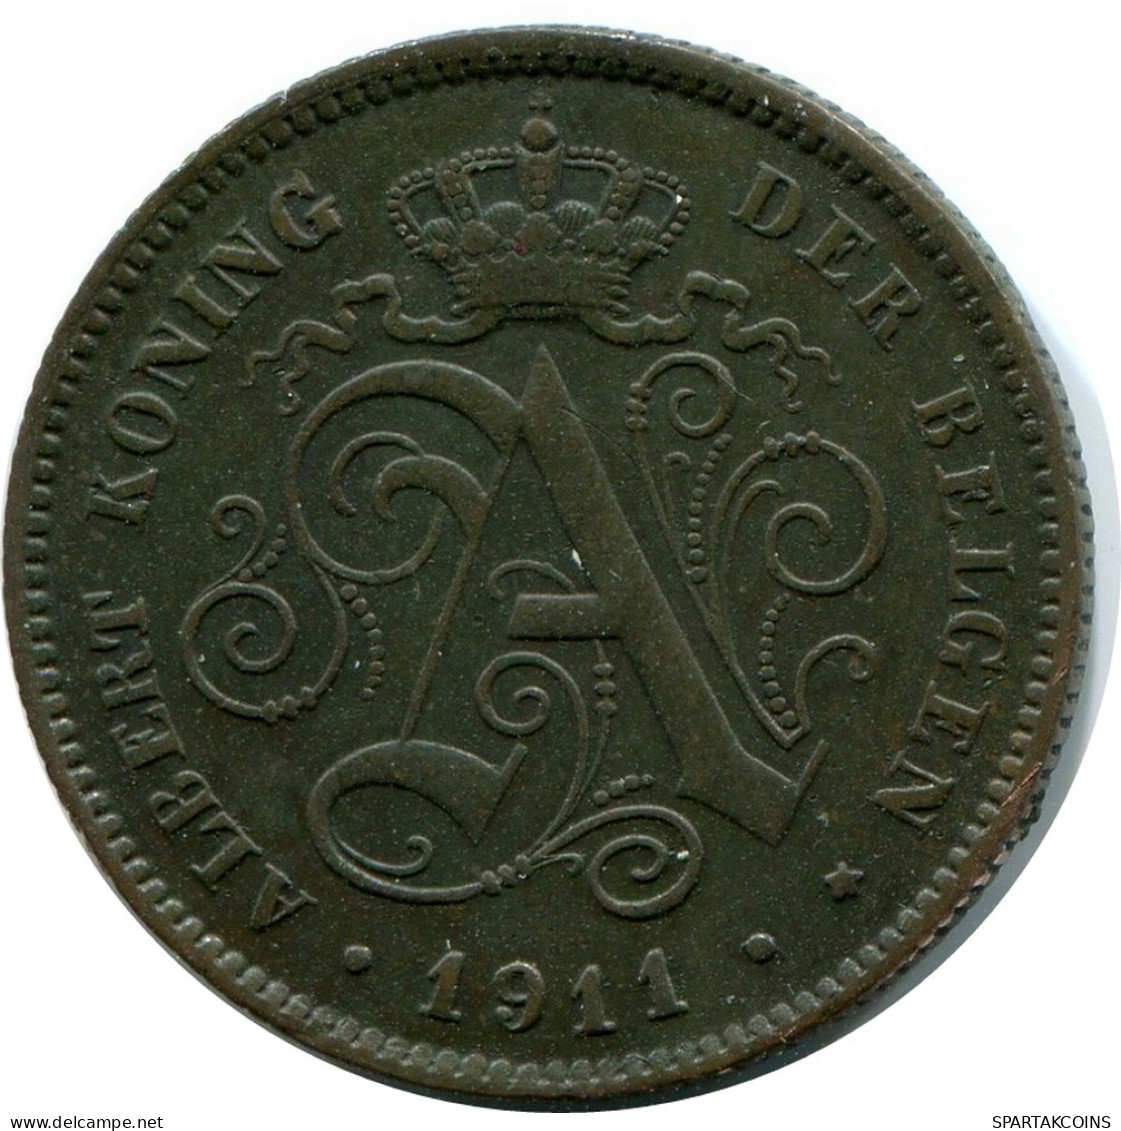 2 CENTIMES 1911 BÉLGICA BELGIUM Moneda DUTCH Text #AX361.E - 2 Cents